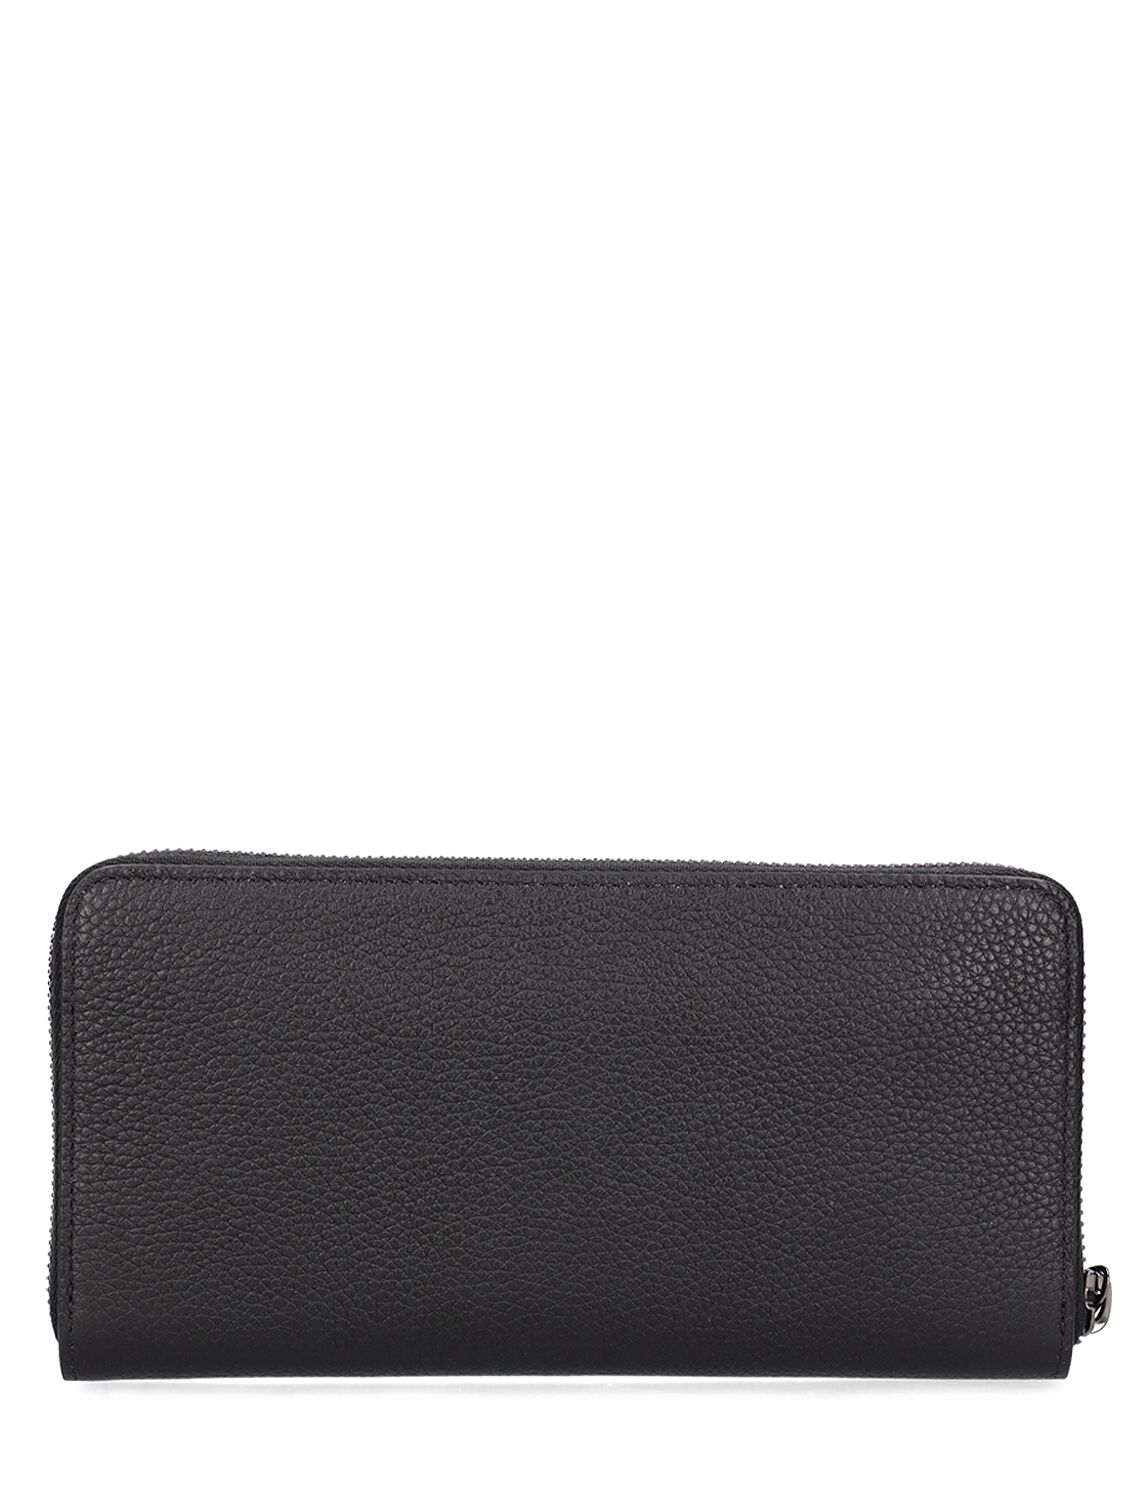 Shop Christian Louboutin By My Side Long Leather Wallet W/logo In Black